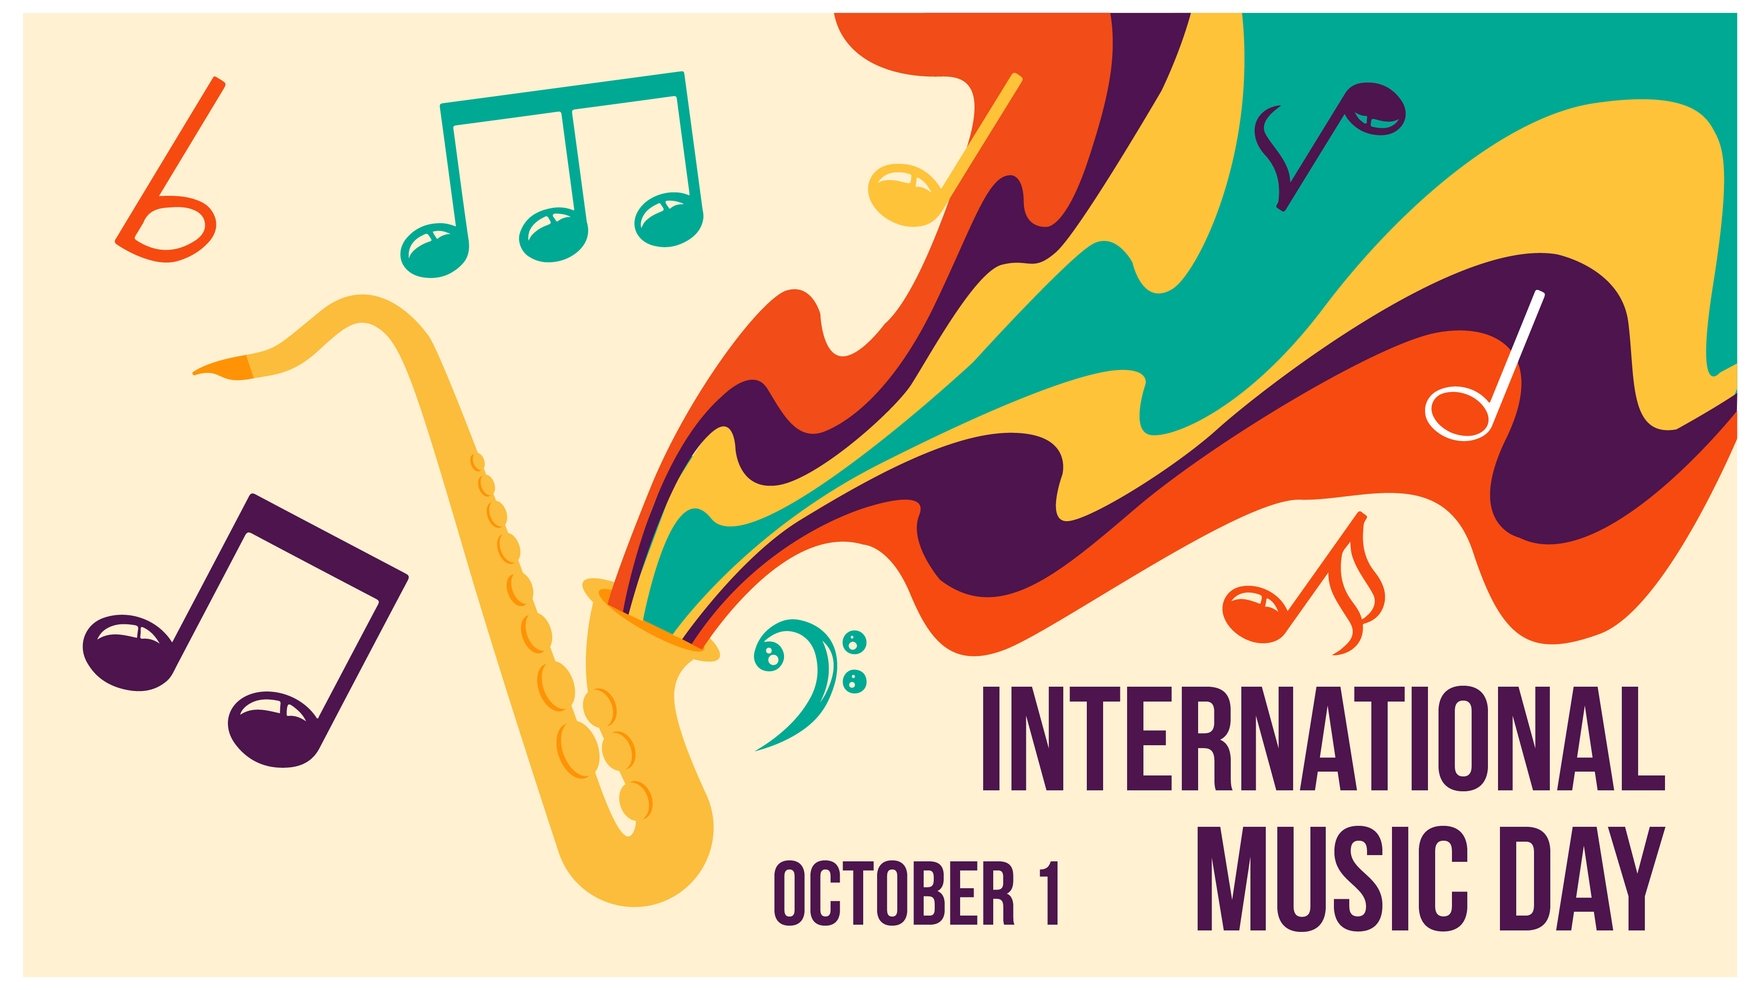 Free International Music Day Image Background